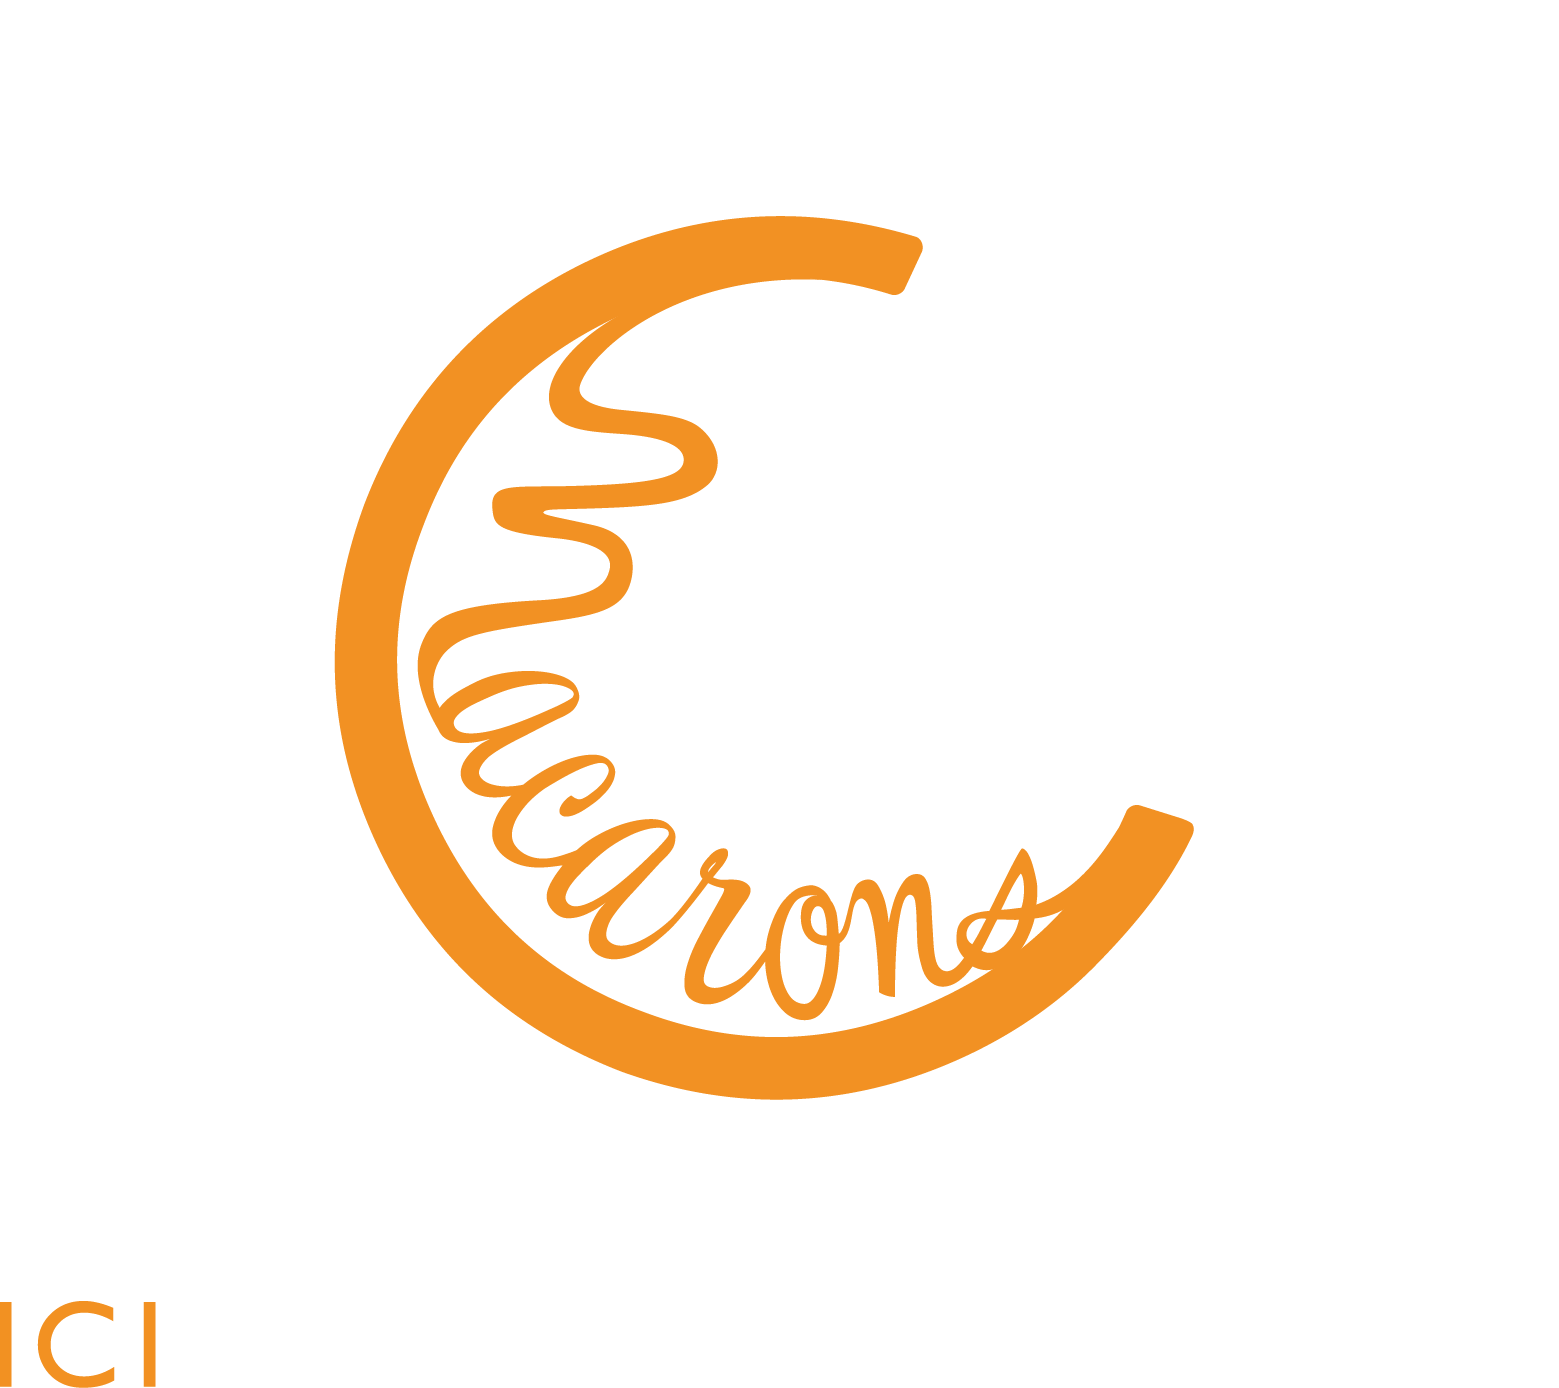 ICI Macarons & Cafe